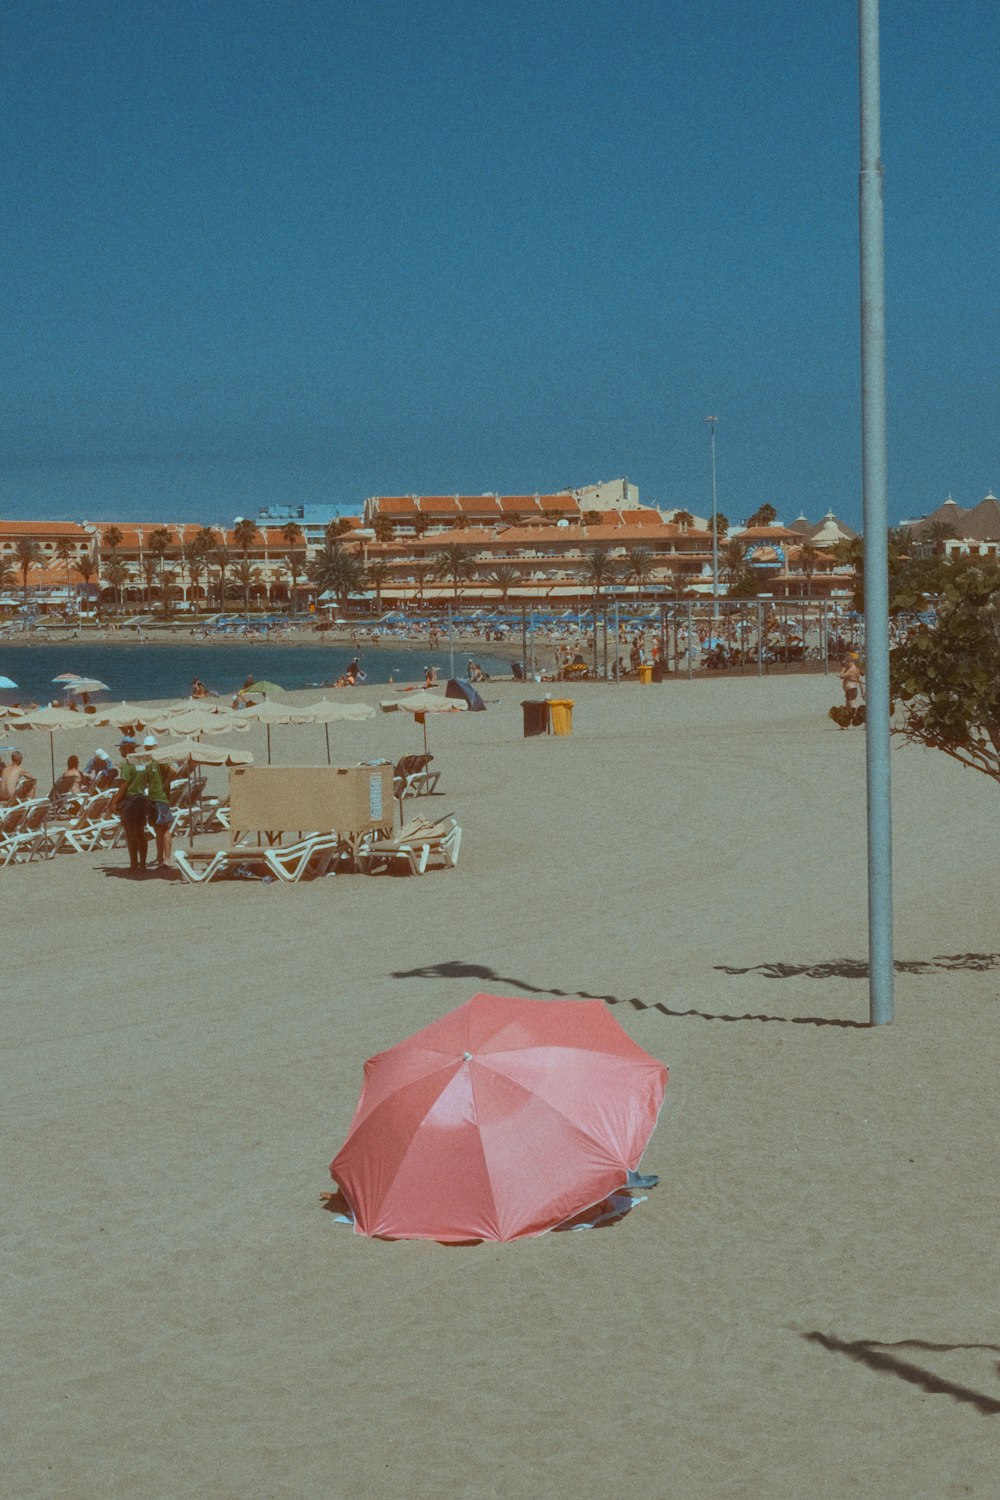 a pink umbrella sitting on top of a sandy beach